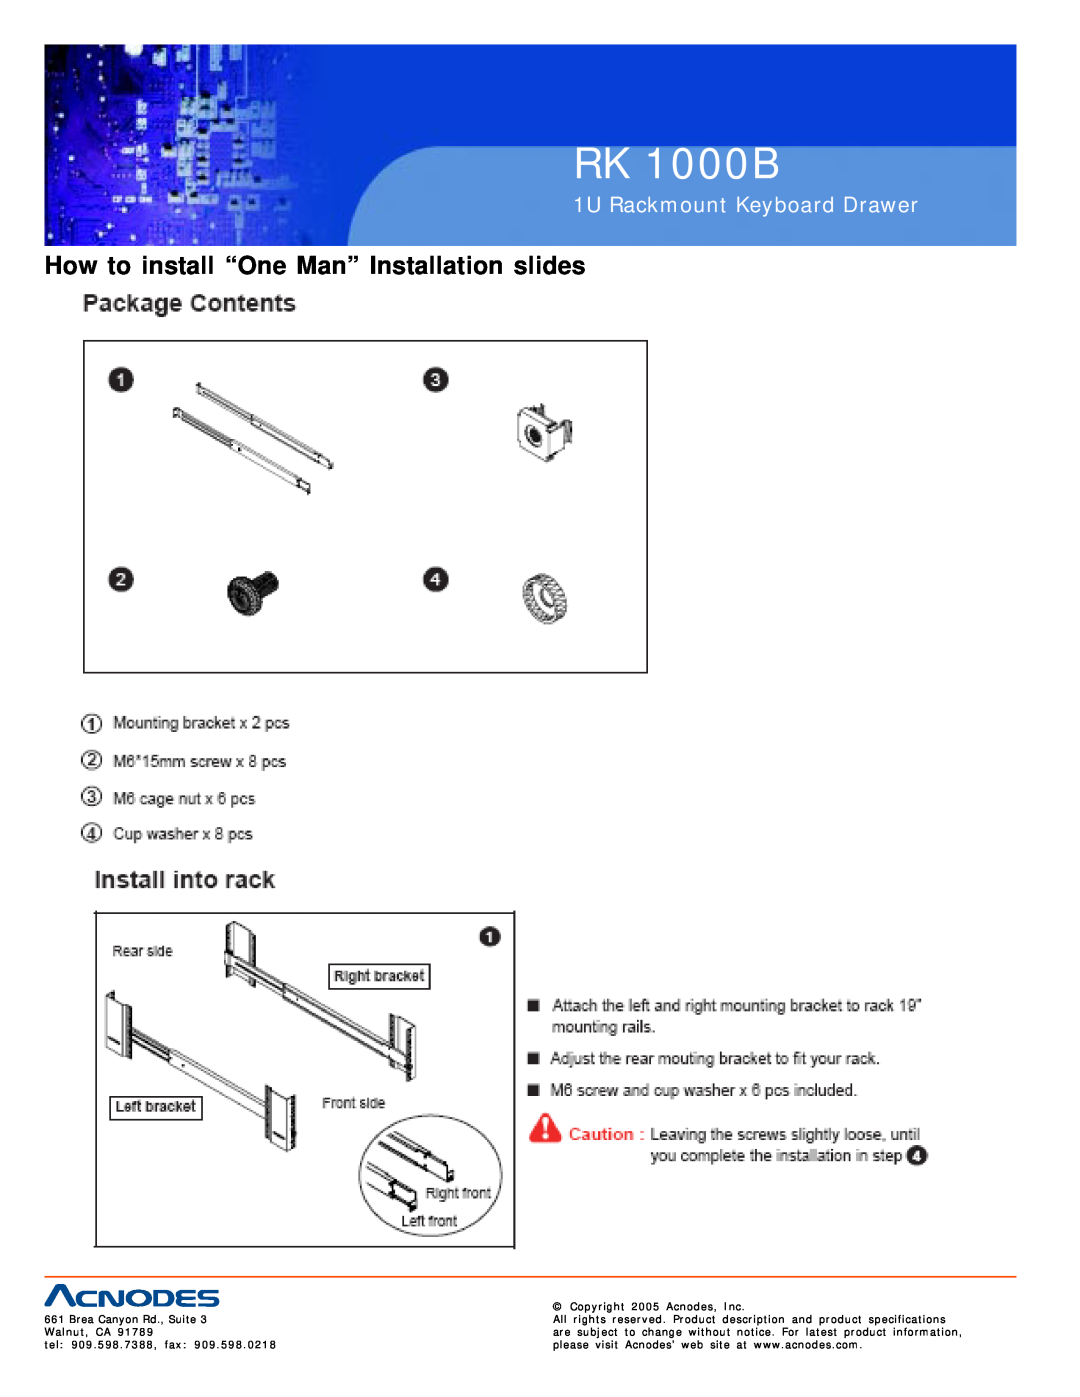 Acnodes RK 1000B How to install “One Man” Installation slides, Copyright 2005 Acnodes, Inc, 1U Rackmount Keyboard Drawer 